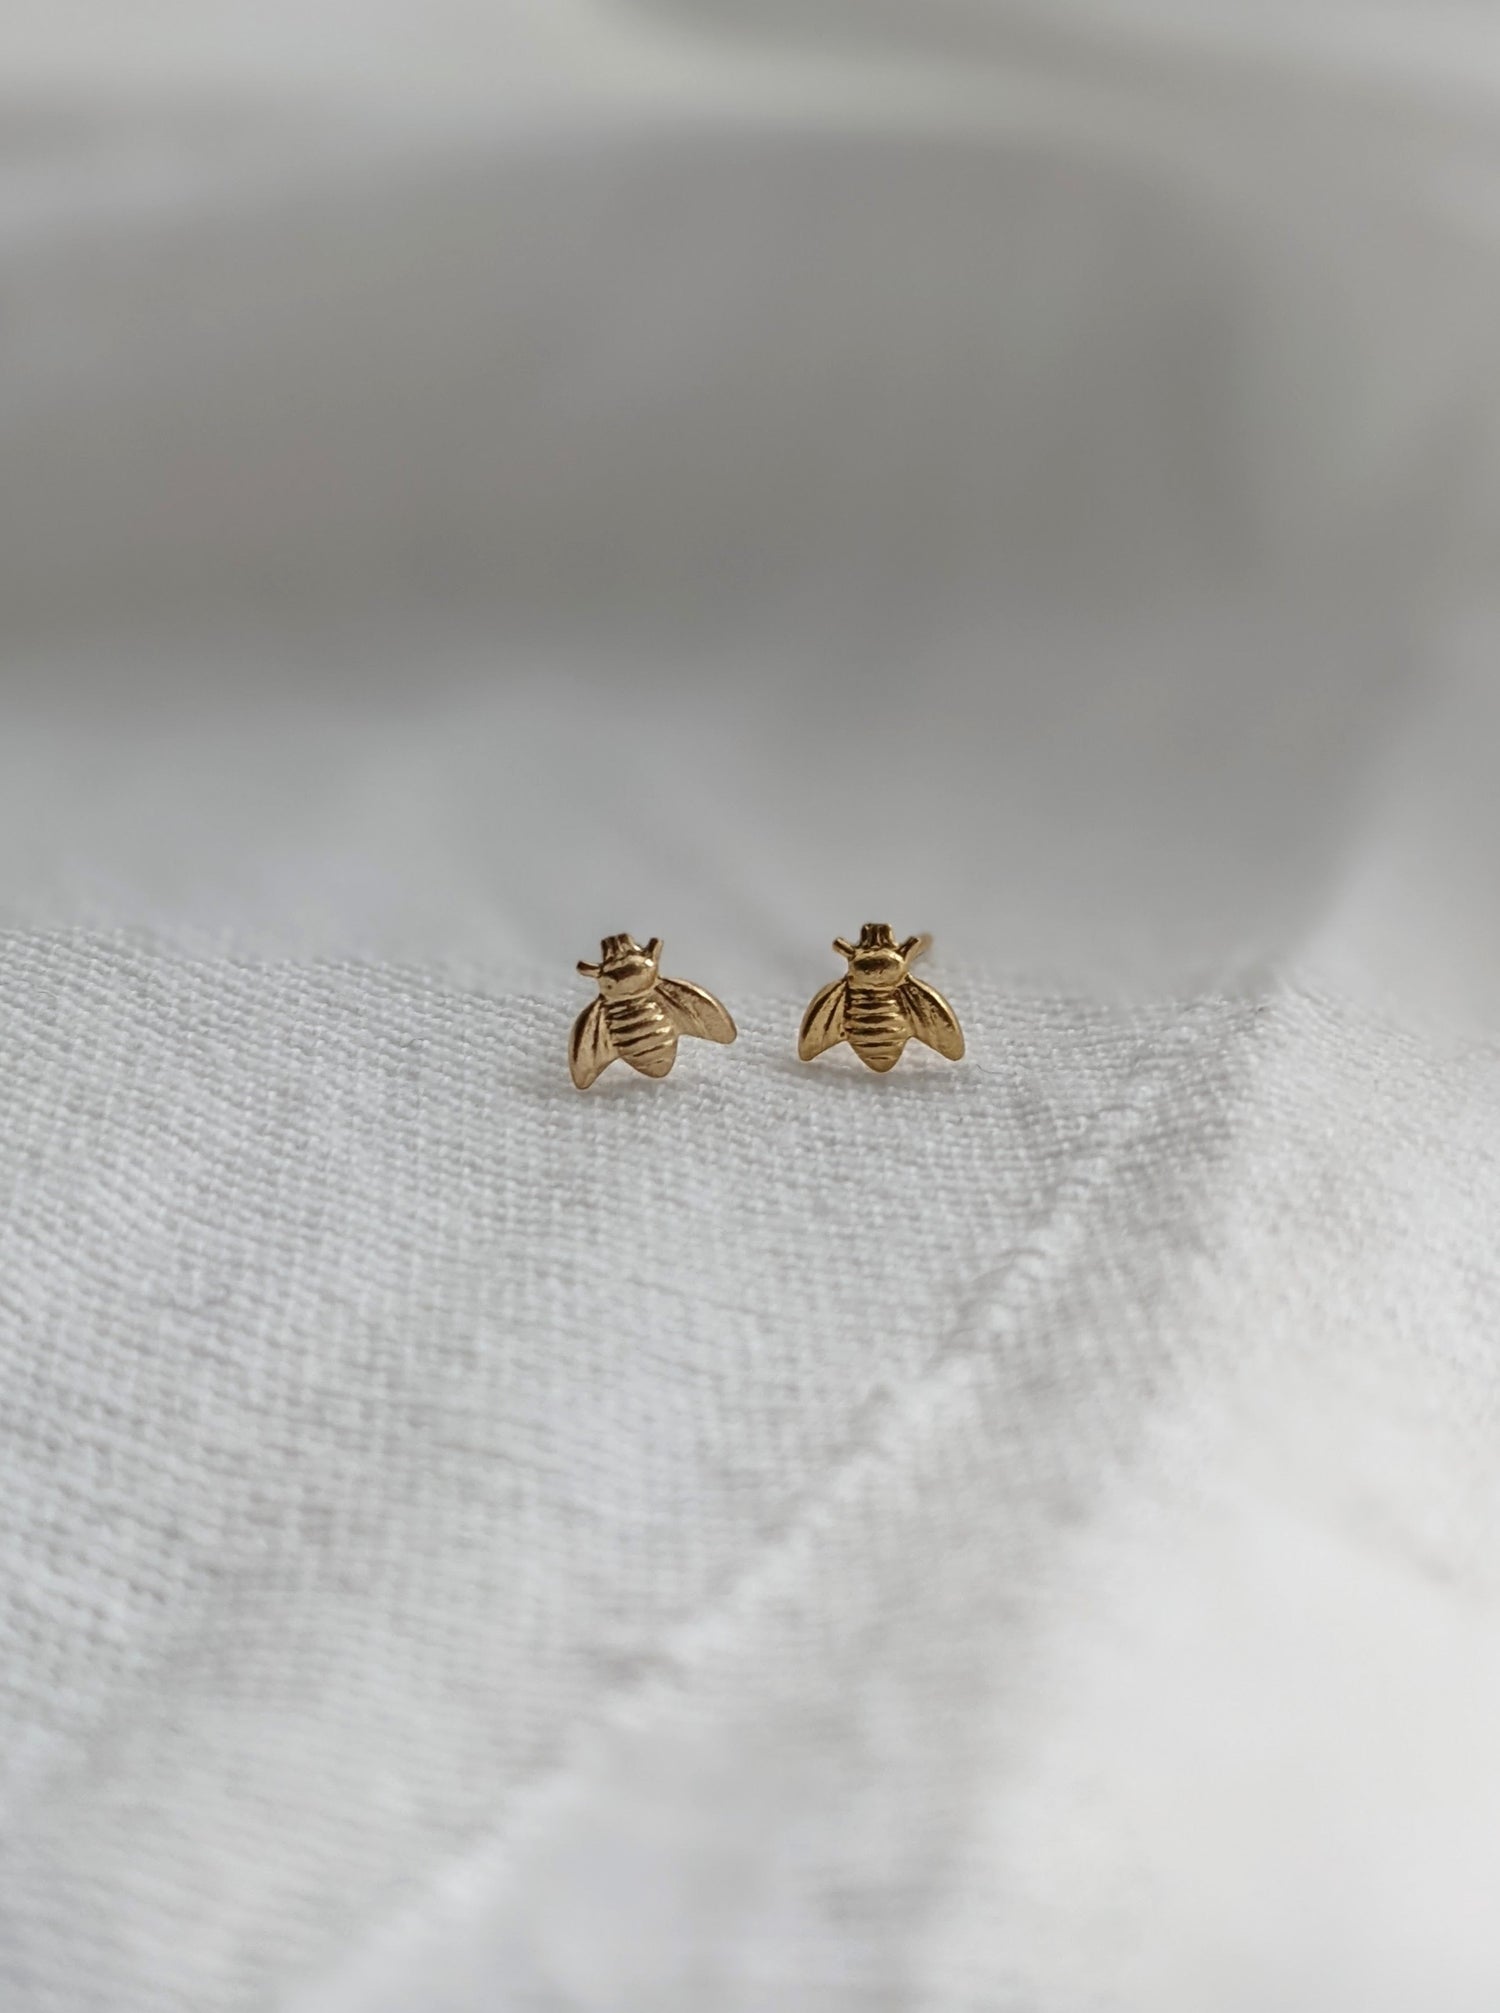 Bee Stud Earrings Layer the Love